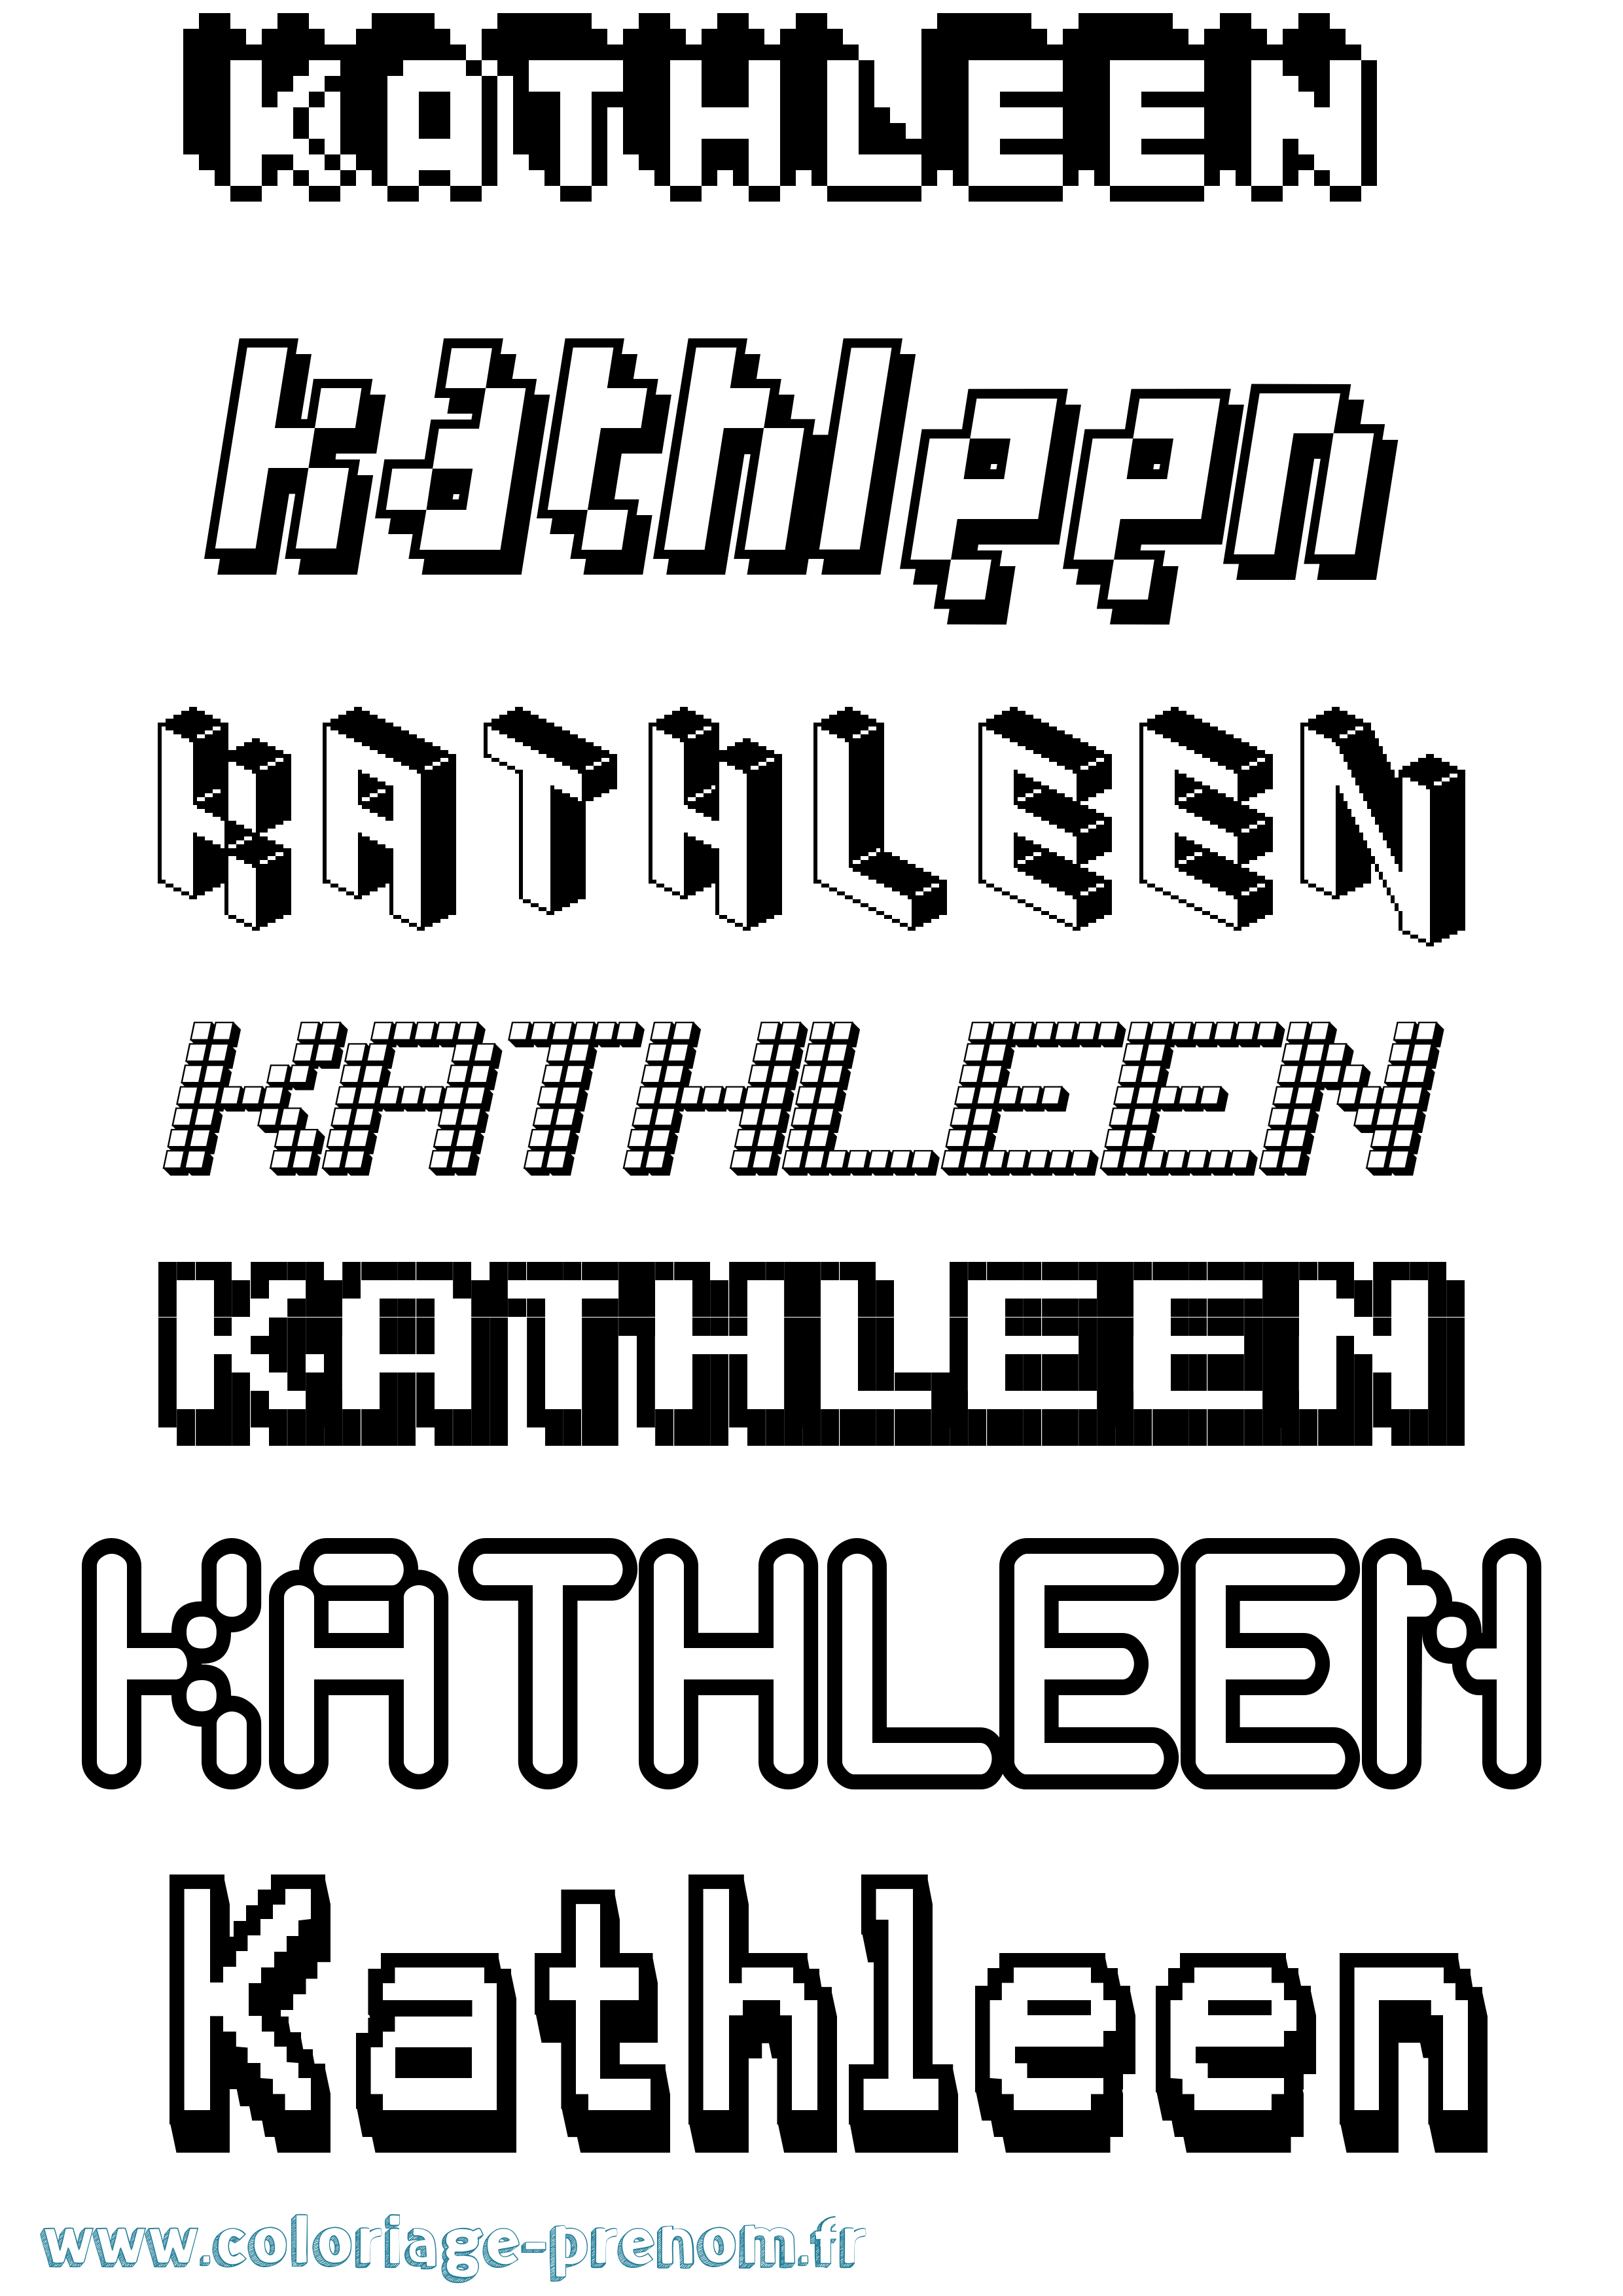 Coloriage prénom Kathleen Pixel